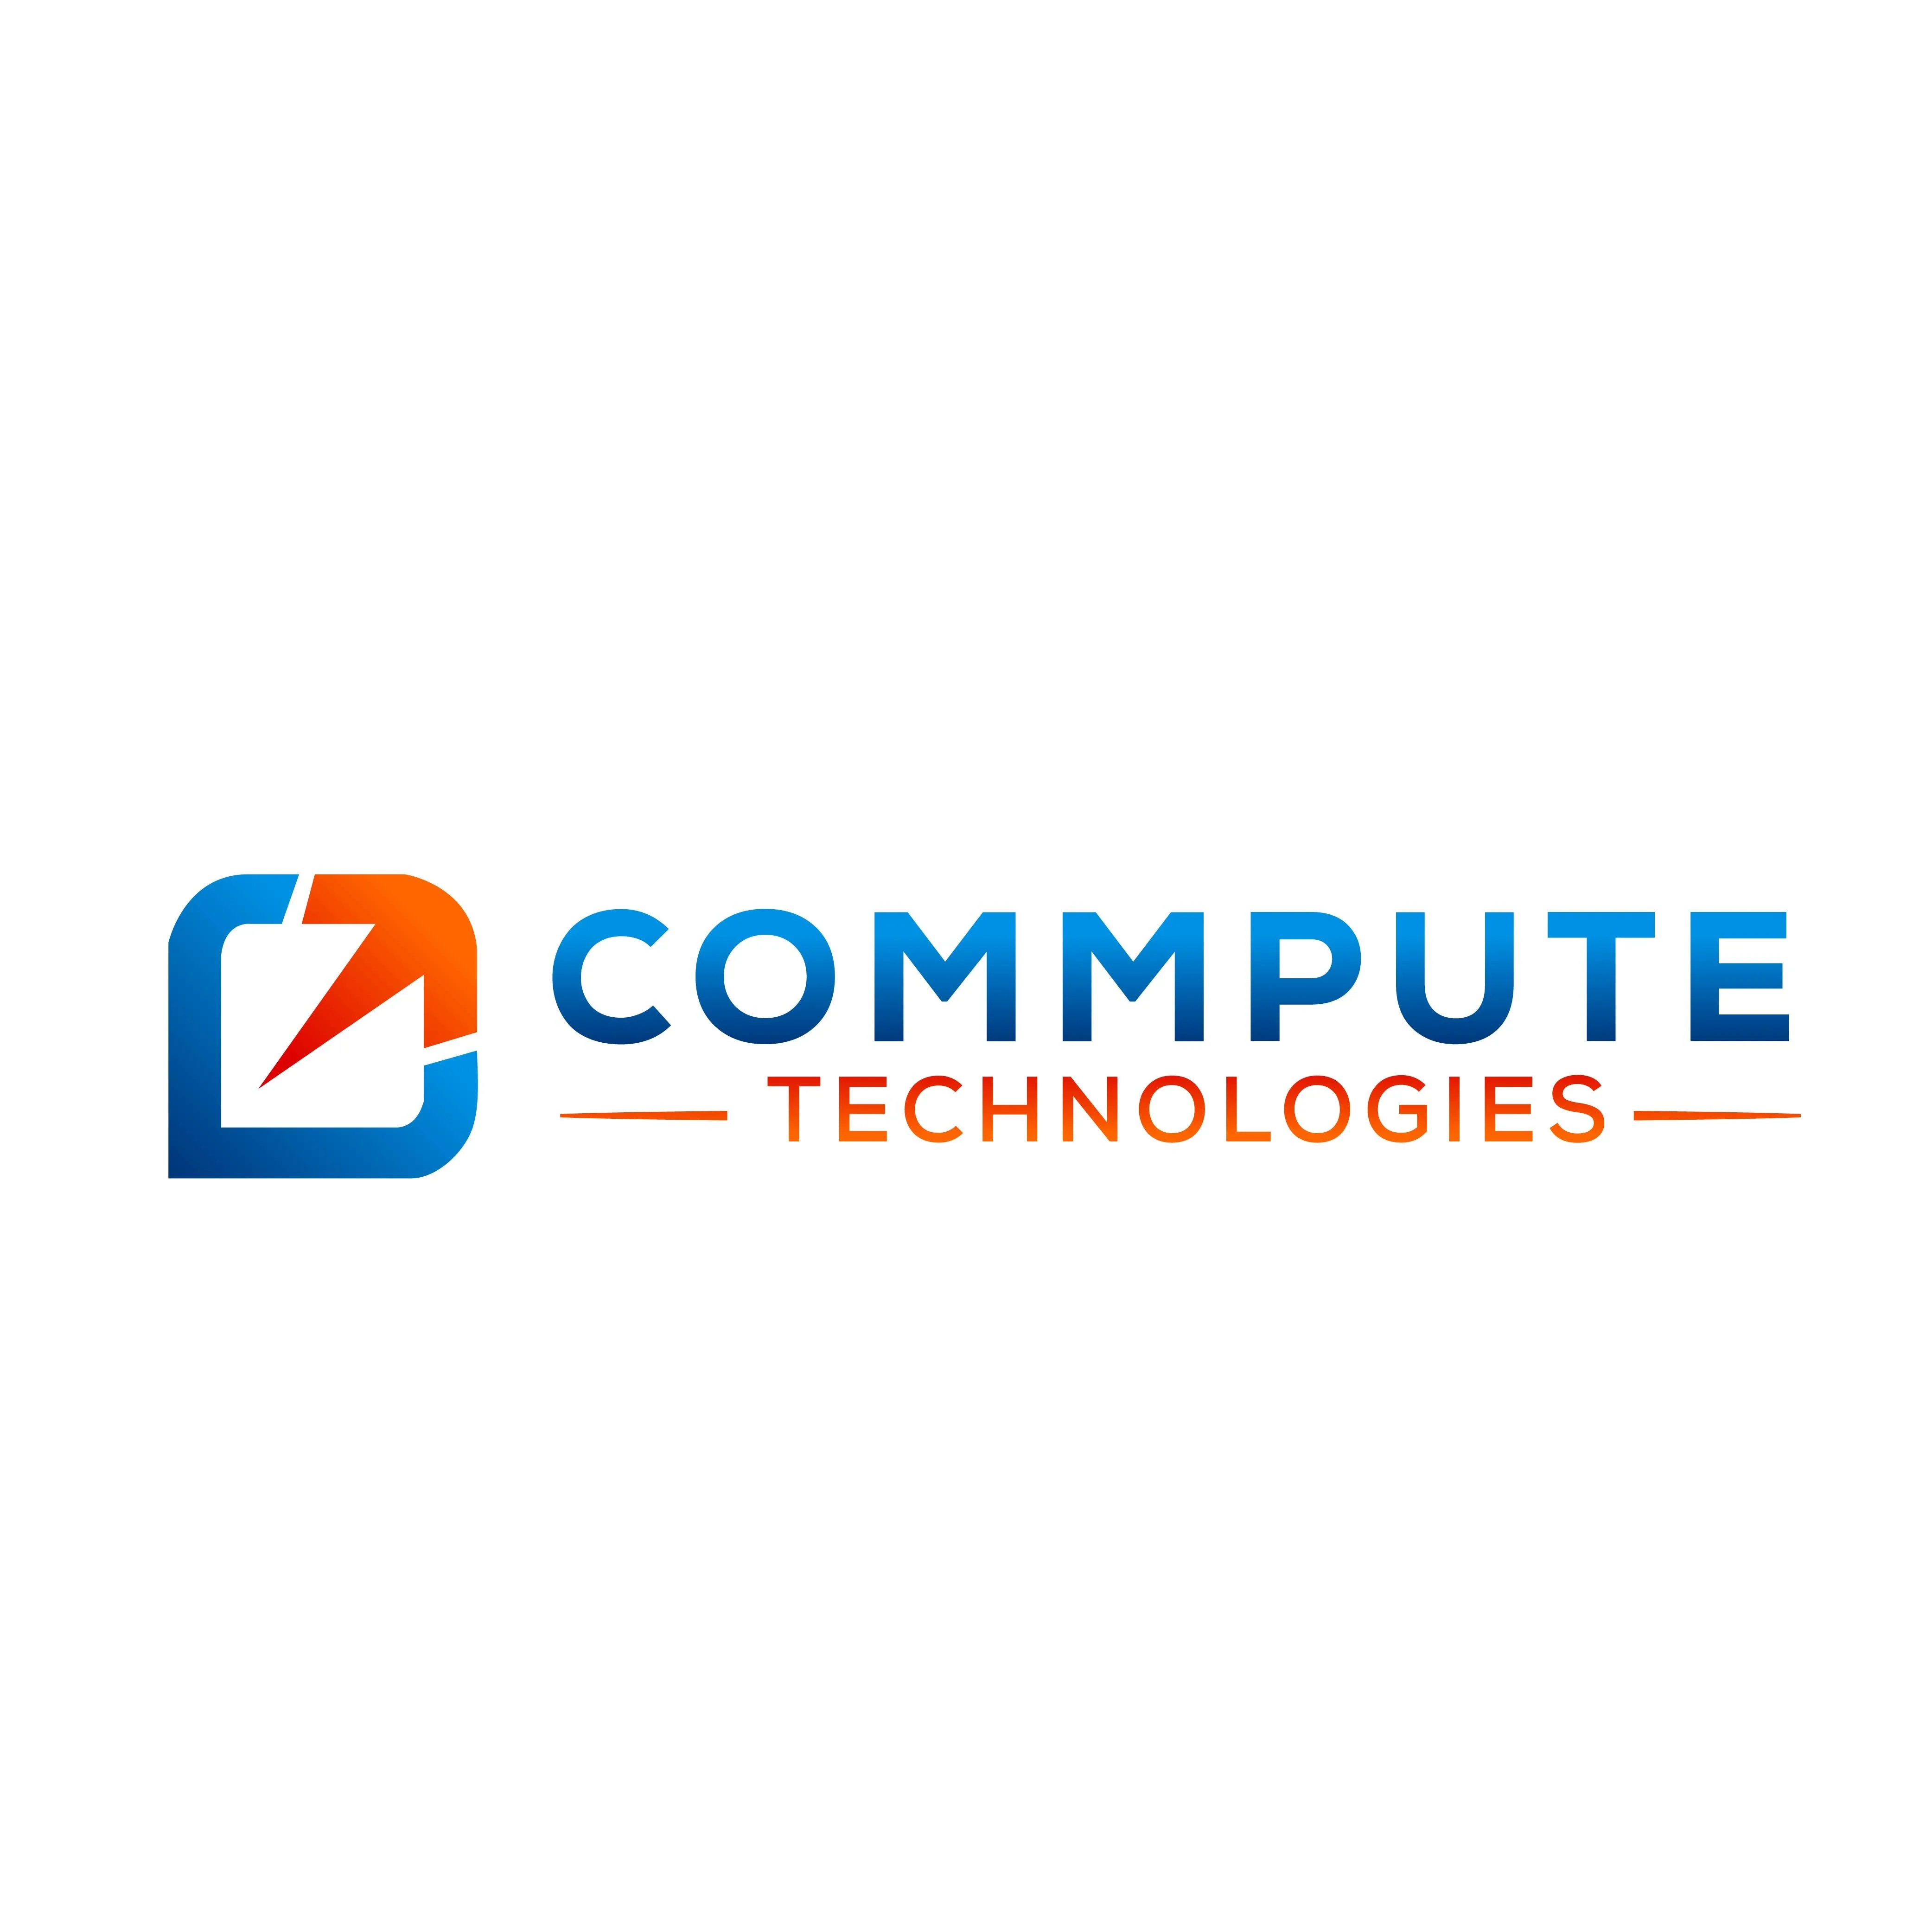 Commpute Technologies Company Profile, information, investors ...